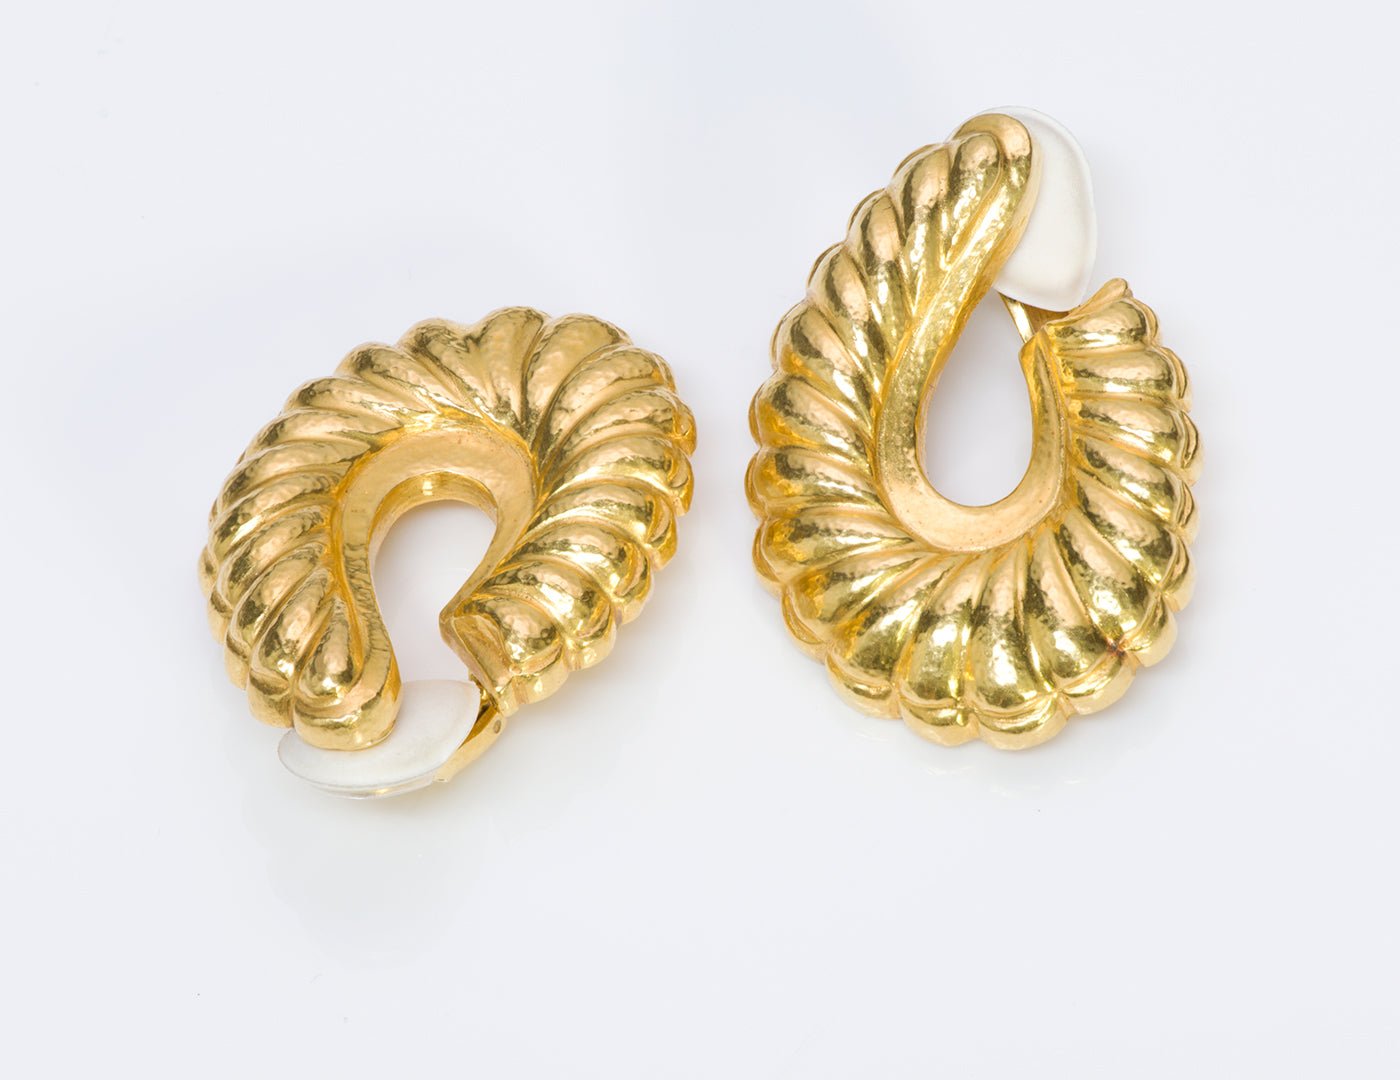 Zolotas Greece 22K Yellow Gold Earrings